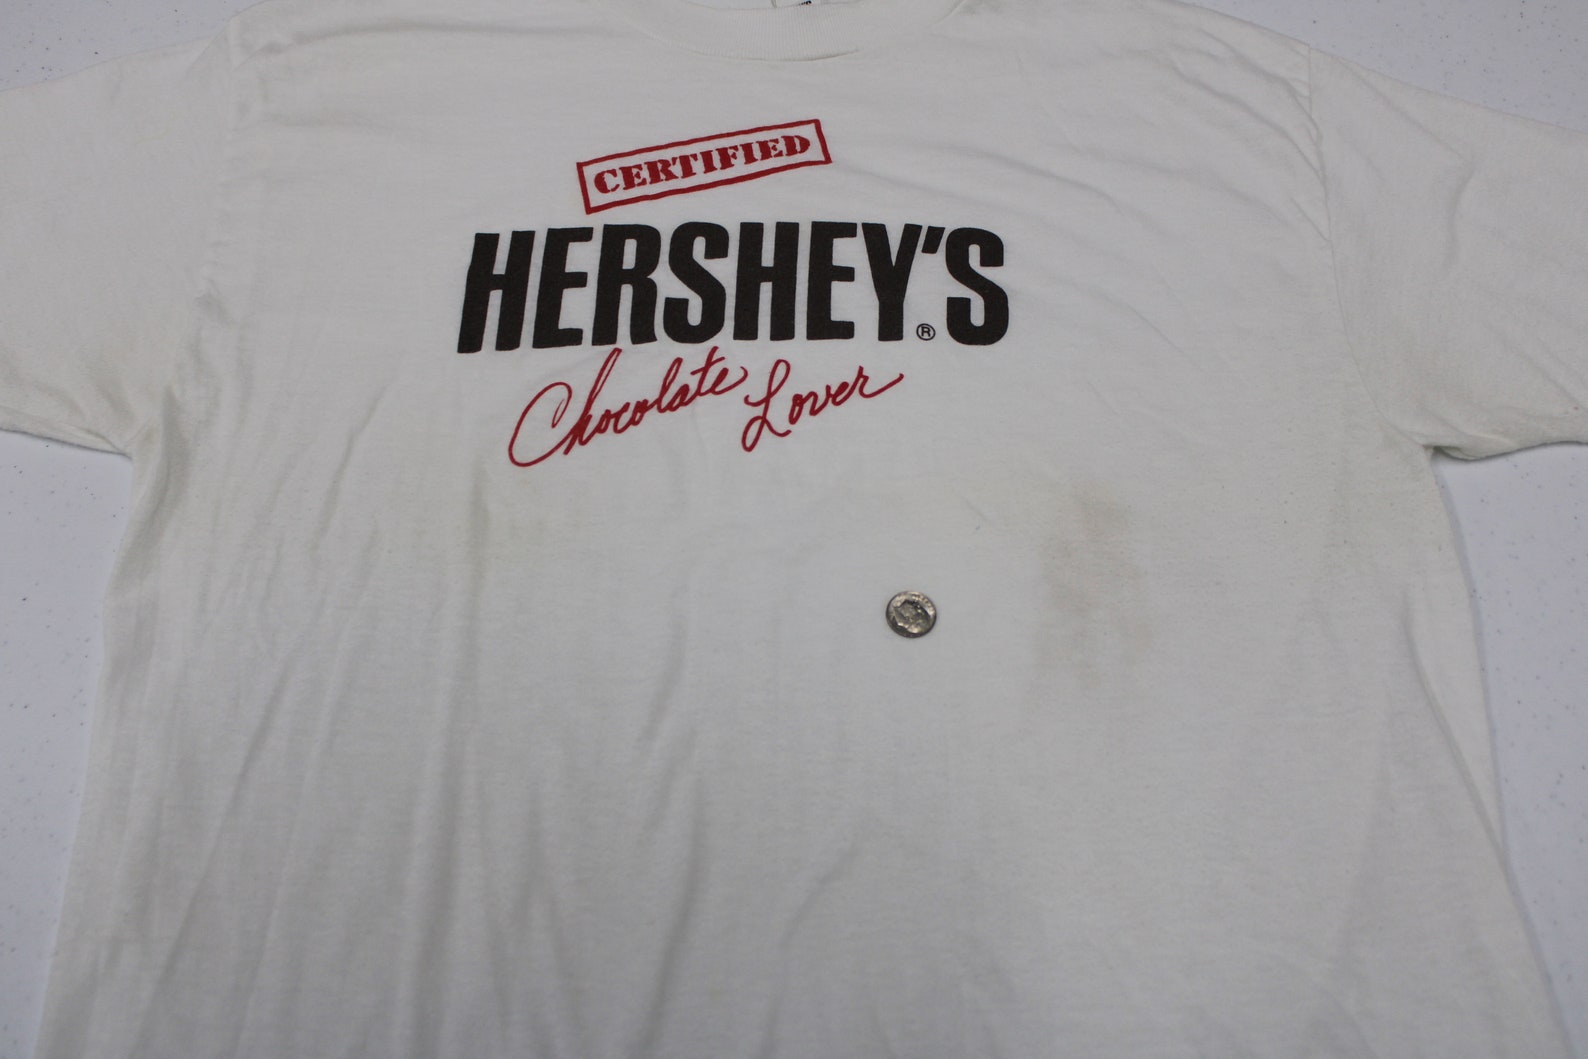 Vintage Graphic T-shirt / Hershey's Print | Etsy